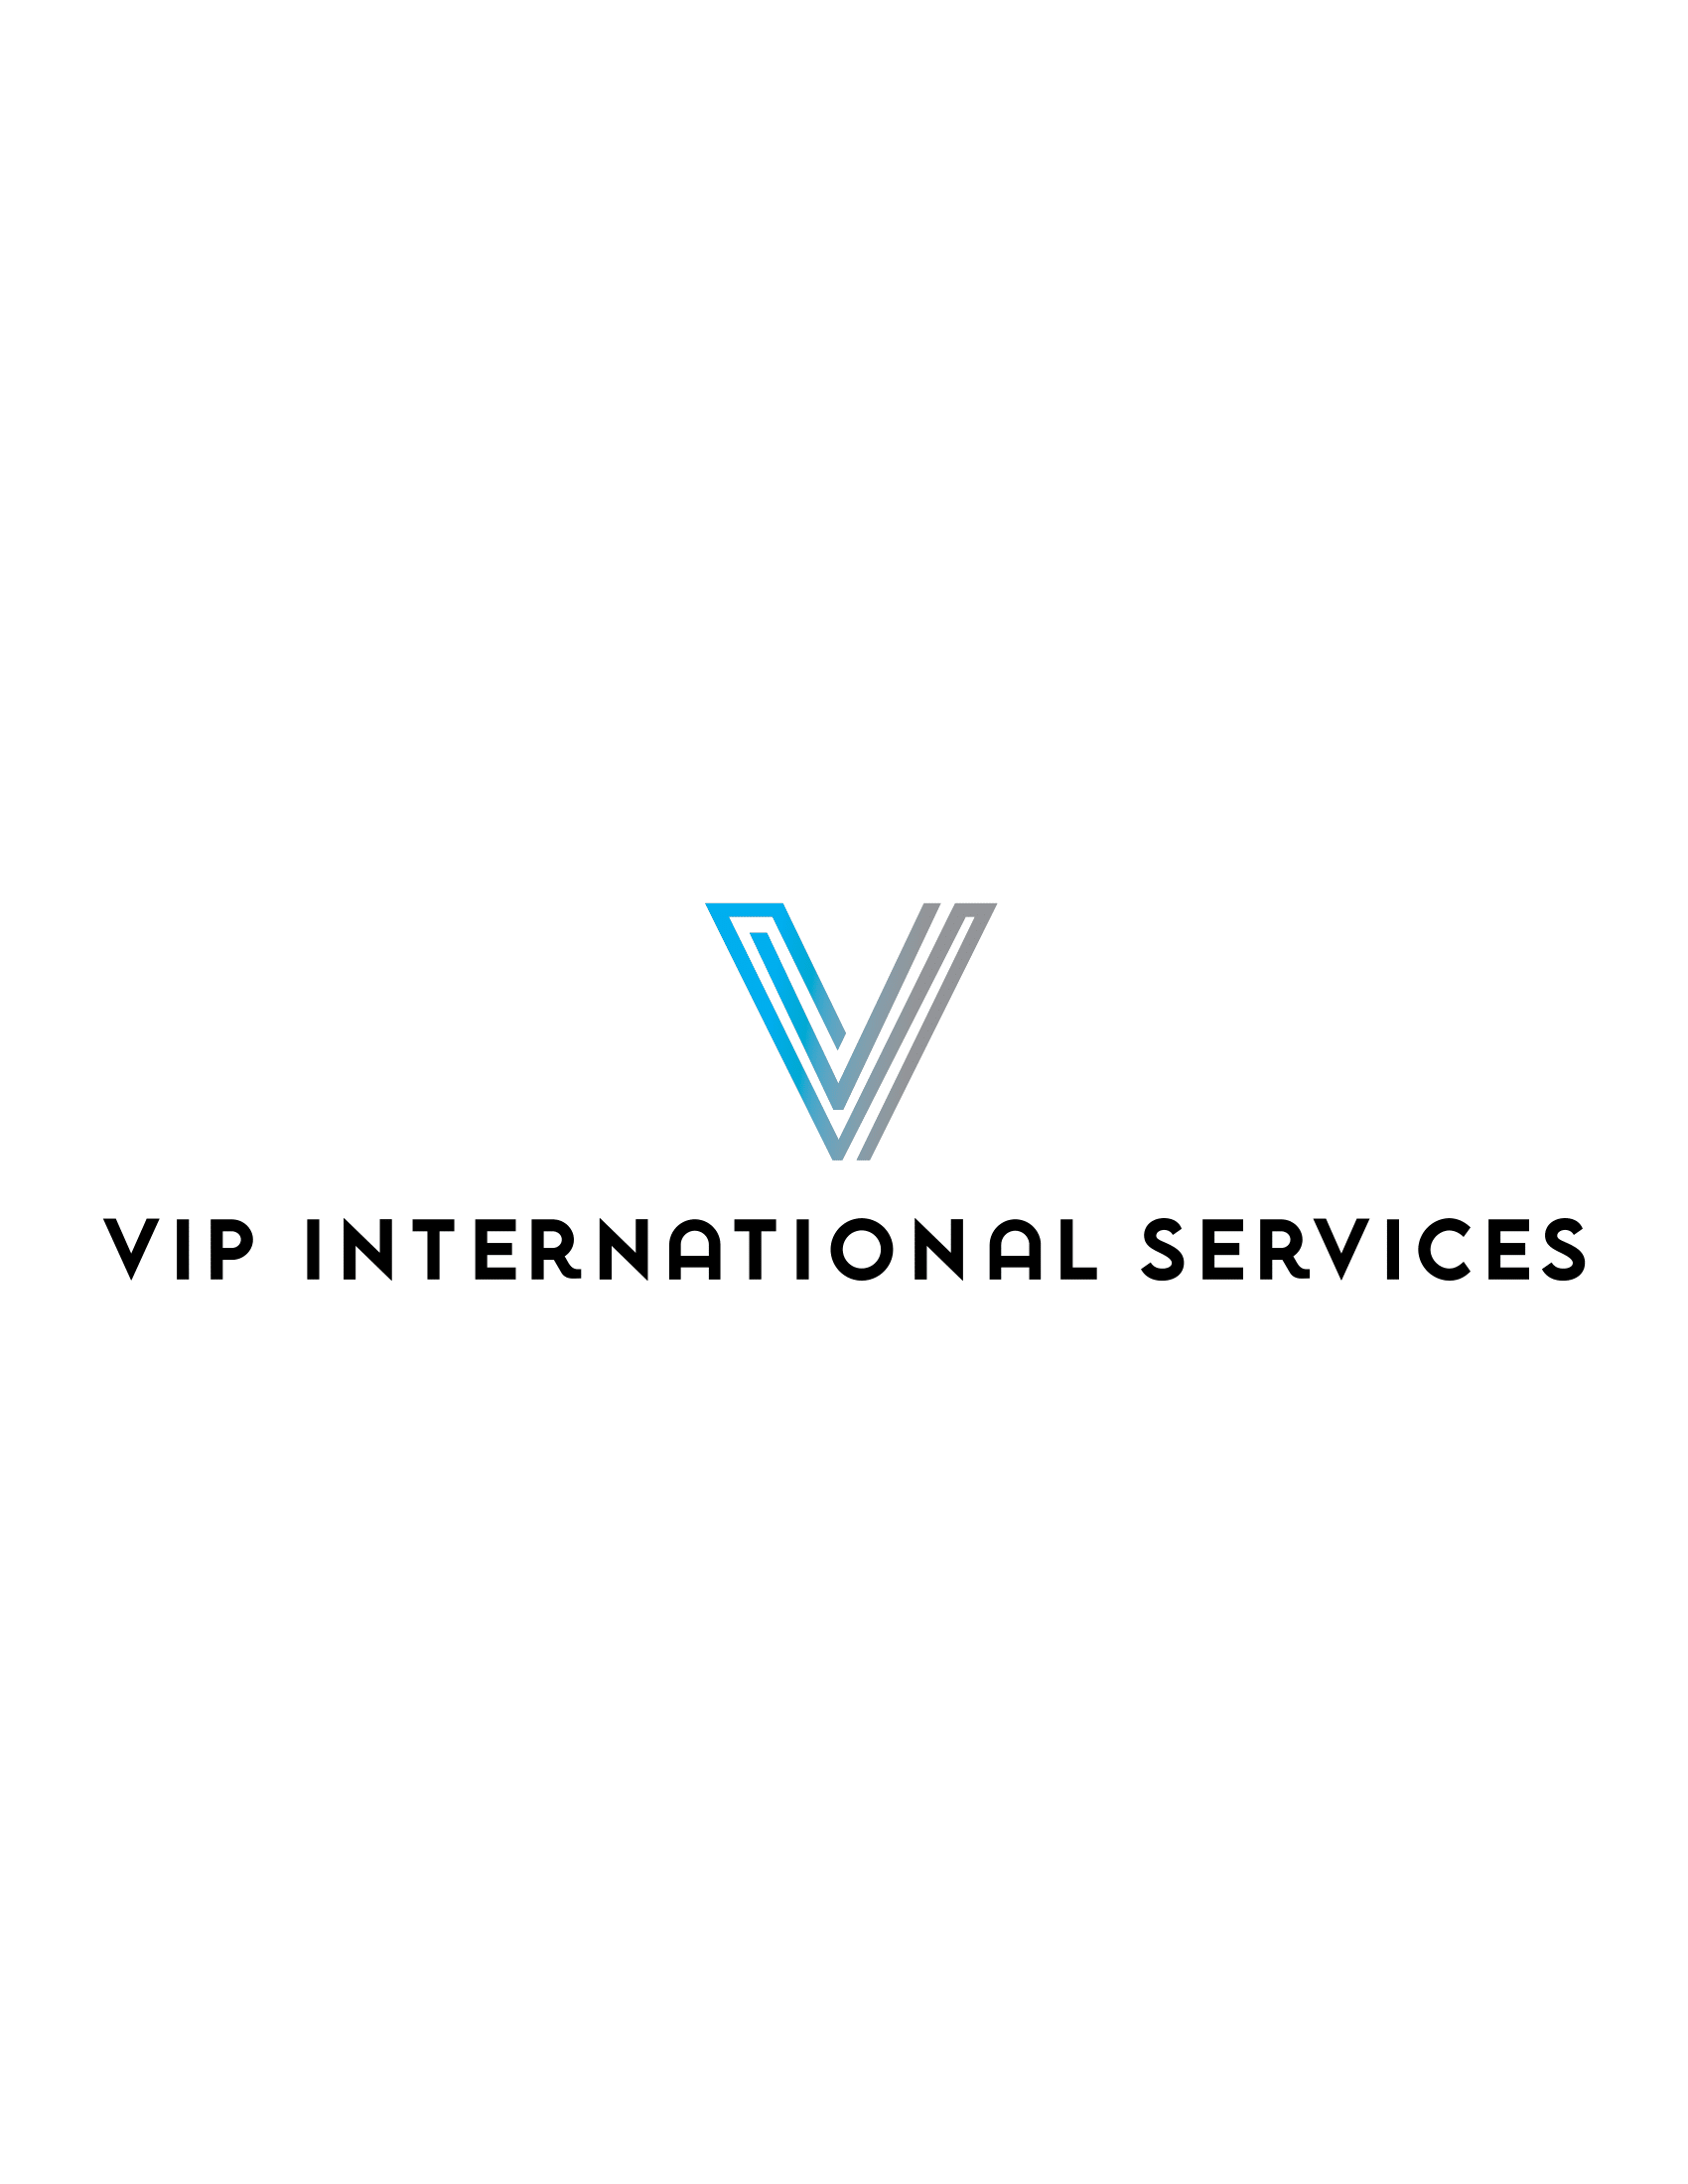 VIP International Services logo